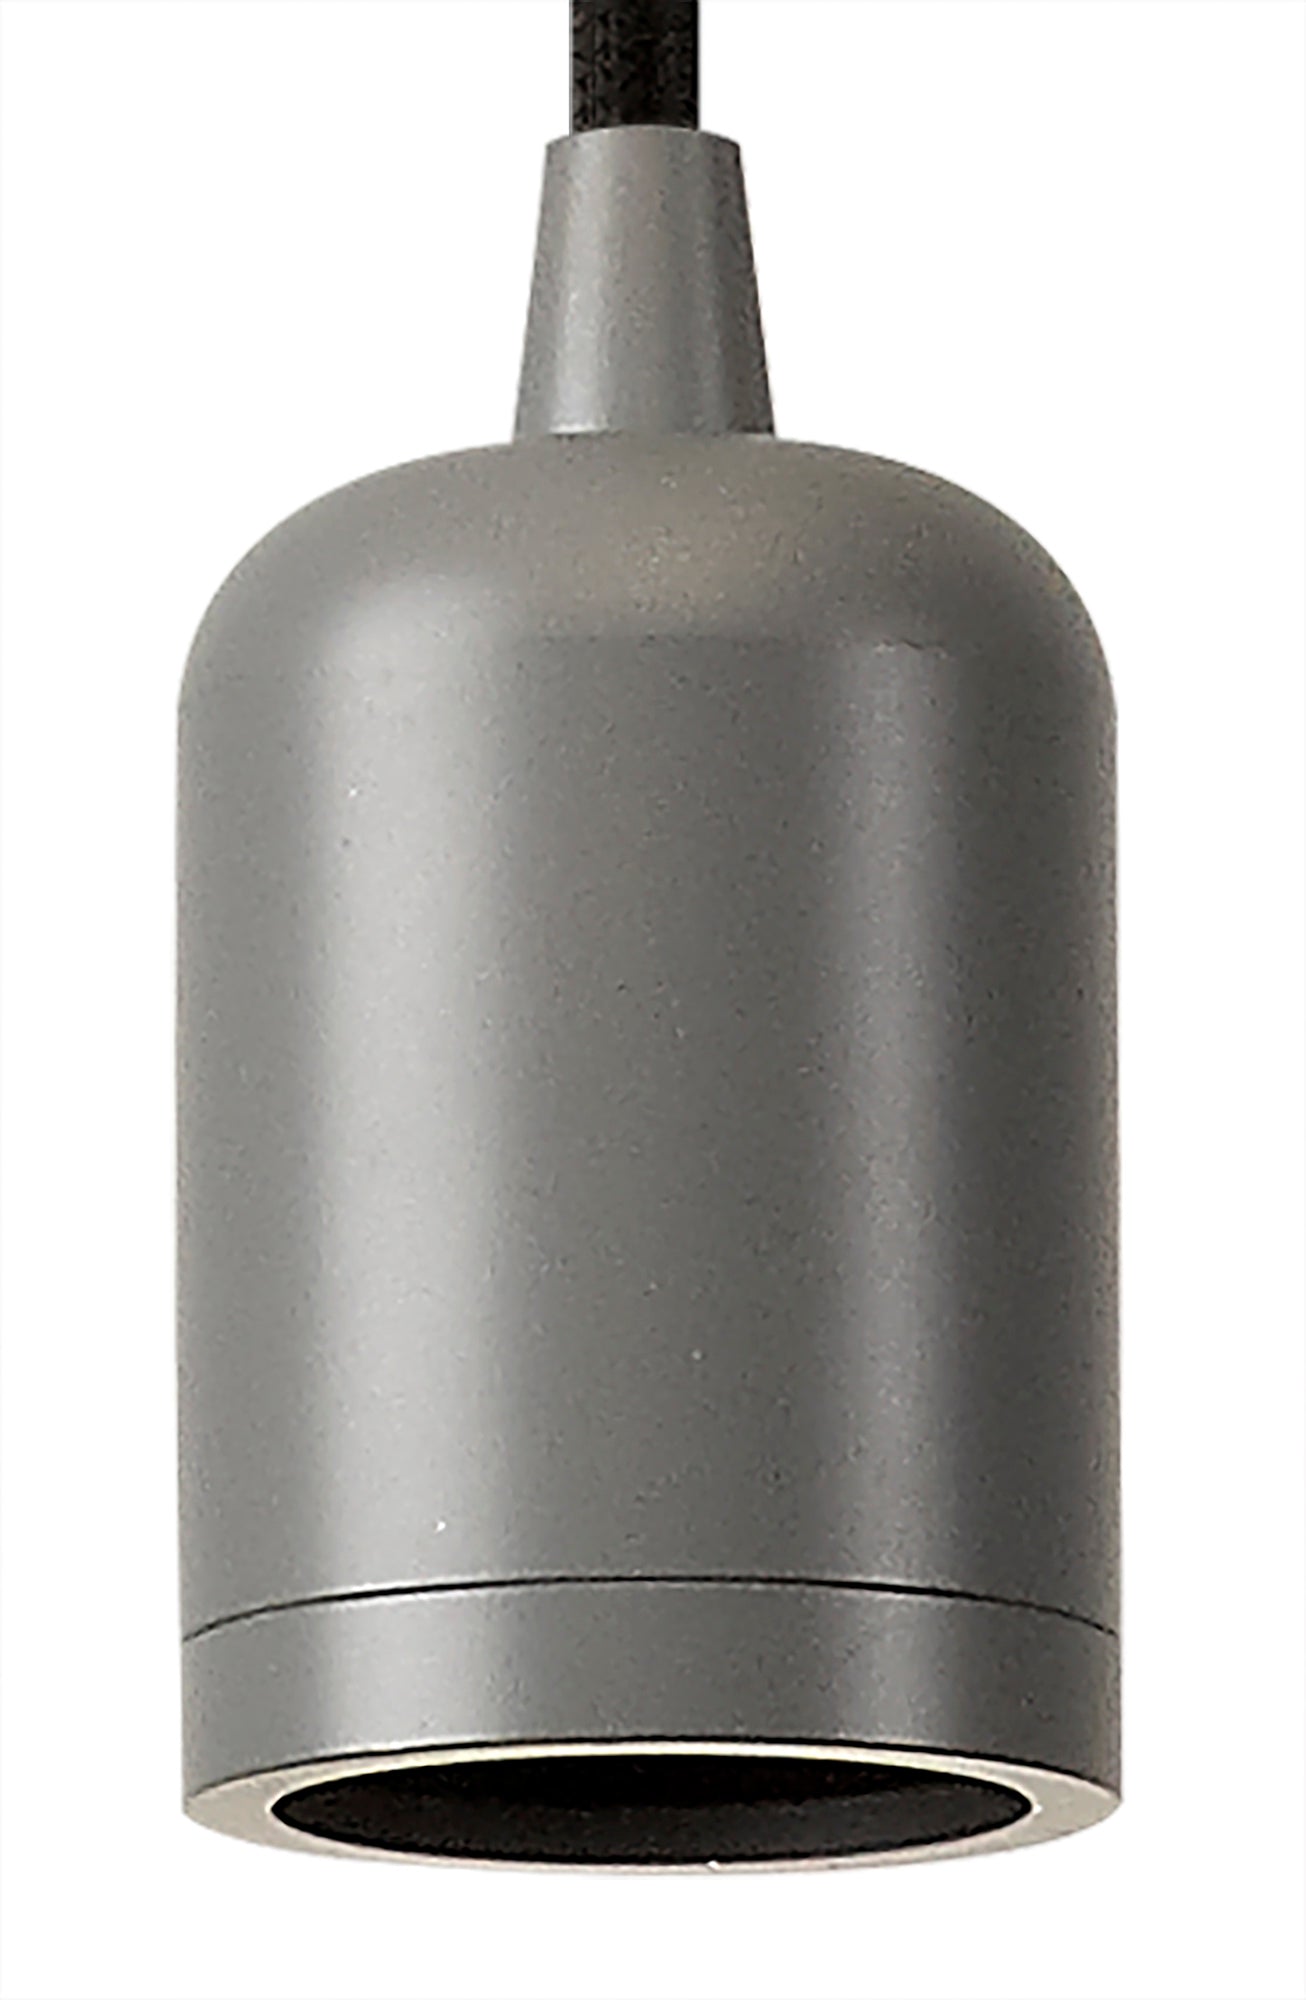 Arpeta 1m Suspension Kit 1 Light Slate Grey/Black Braided Cable, E27 Max 60W, c/w Ceiling Bracket